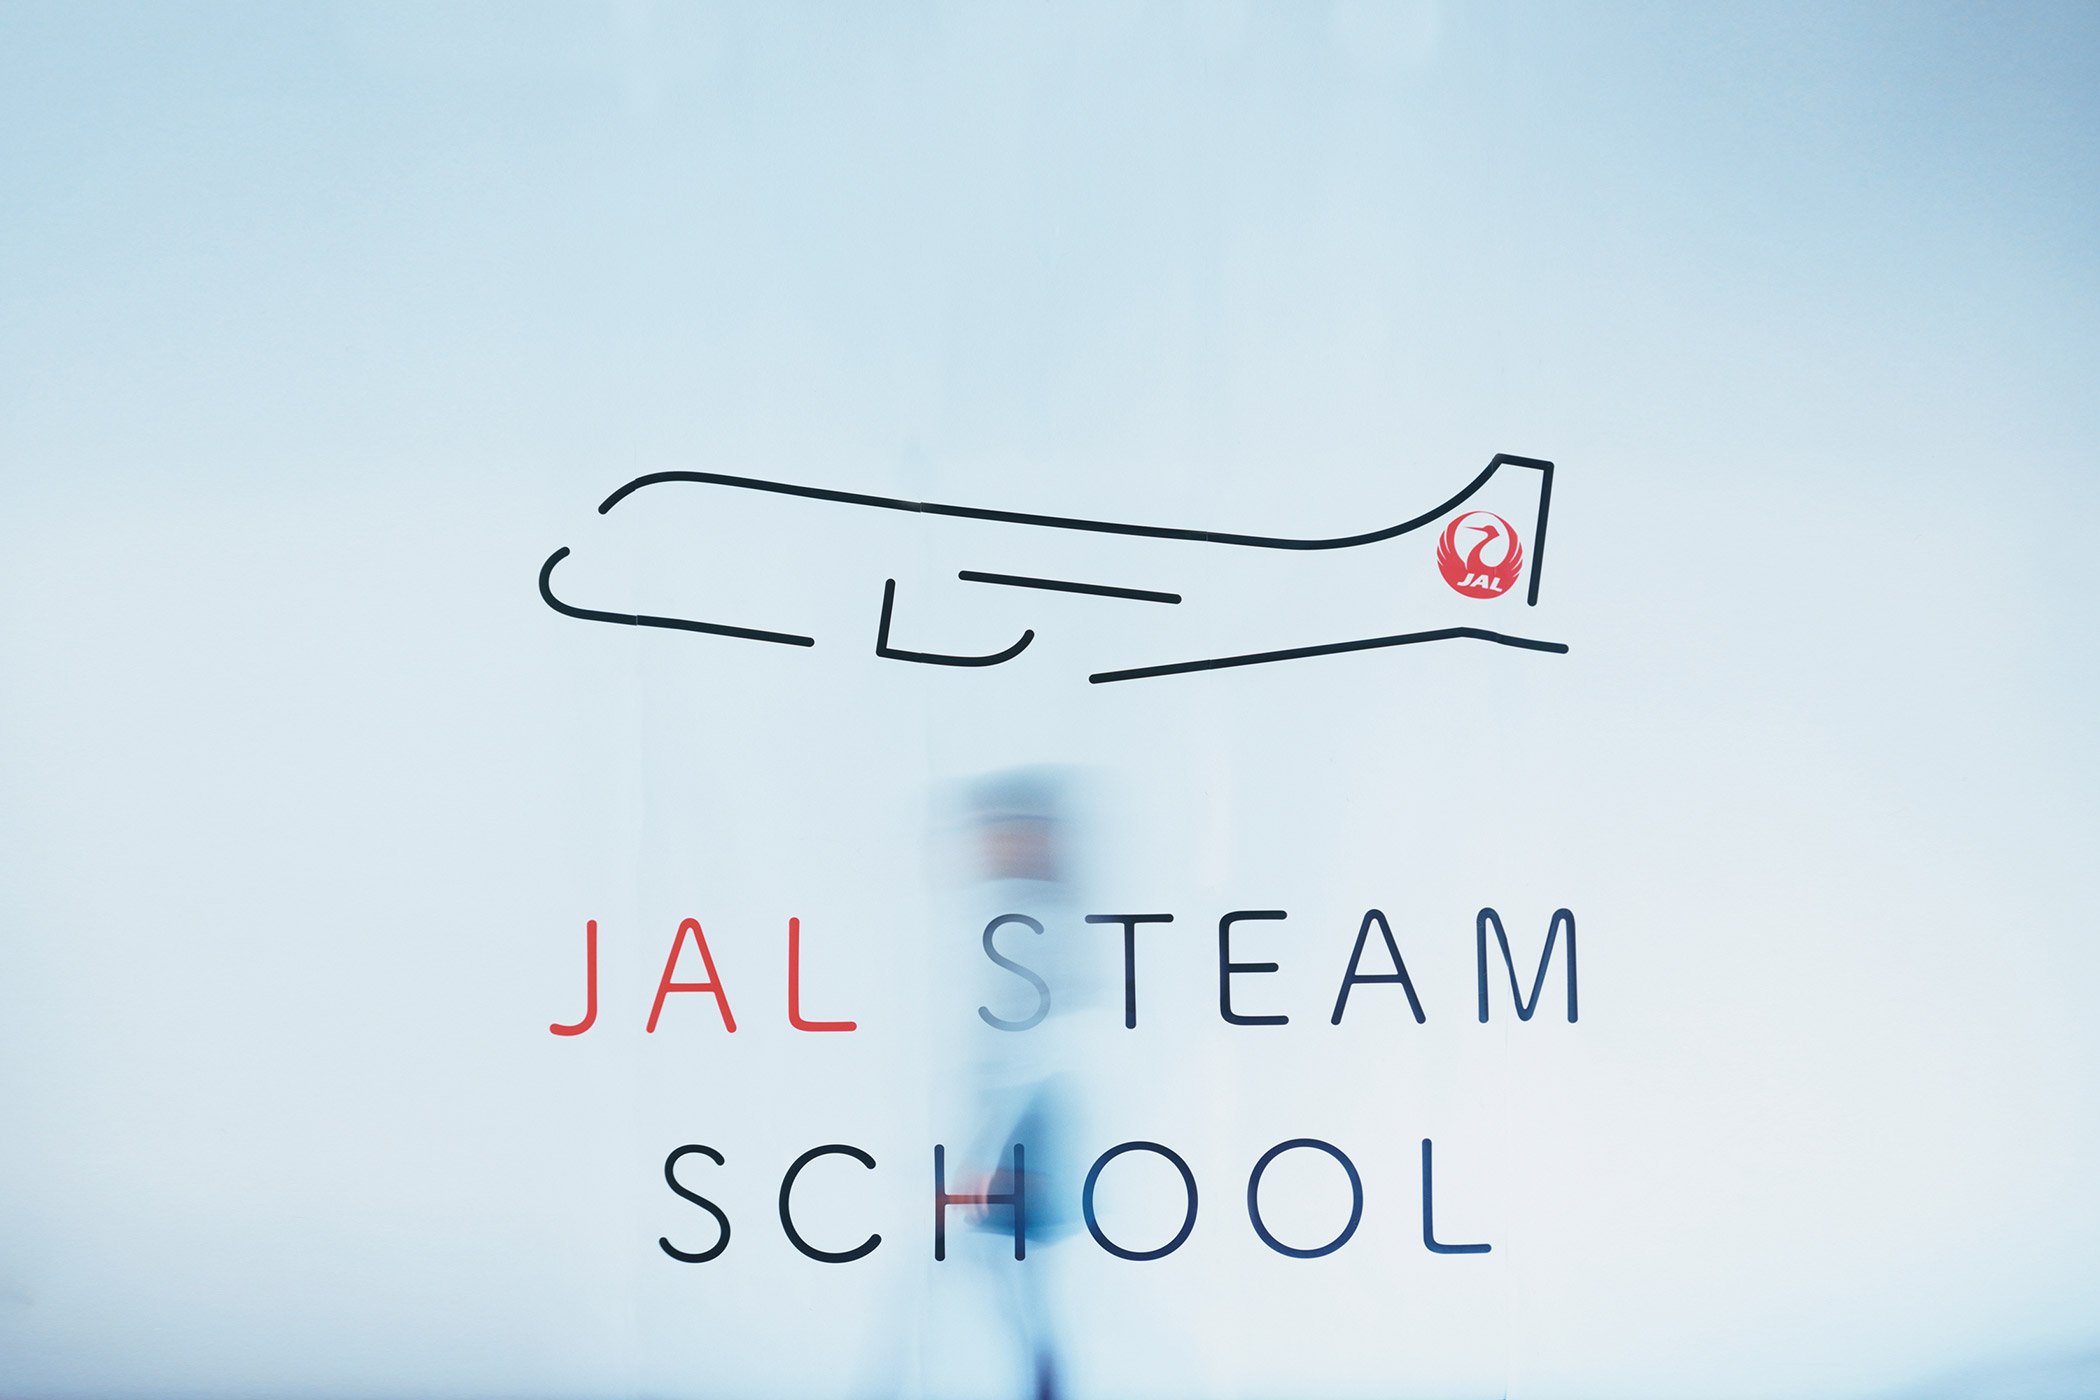 JAL STEAM SCHOOL